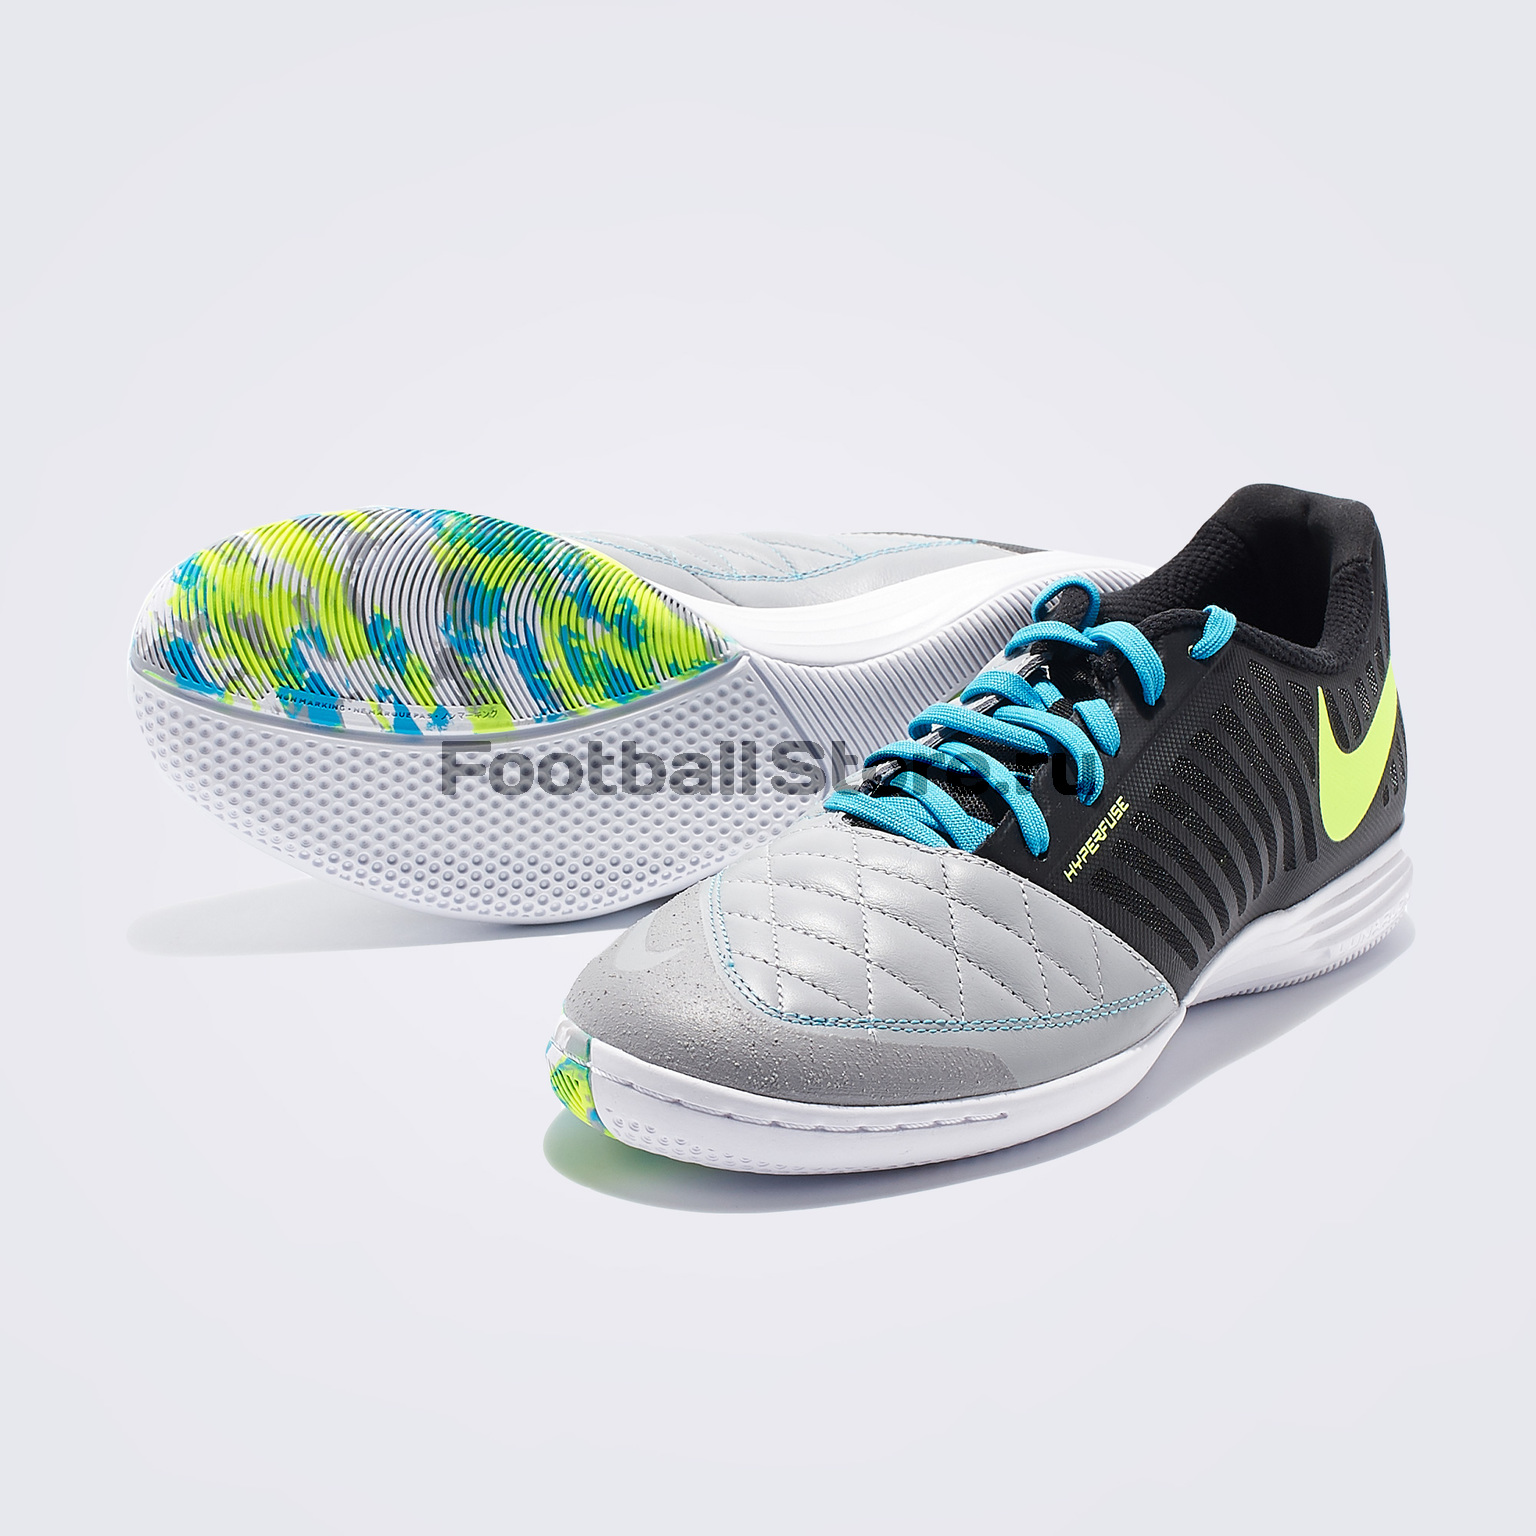 Футзалки Nike LunarGato II 580456-070